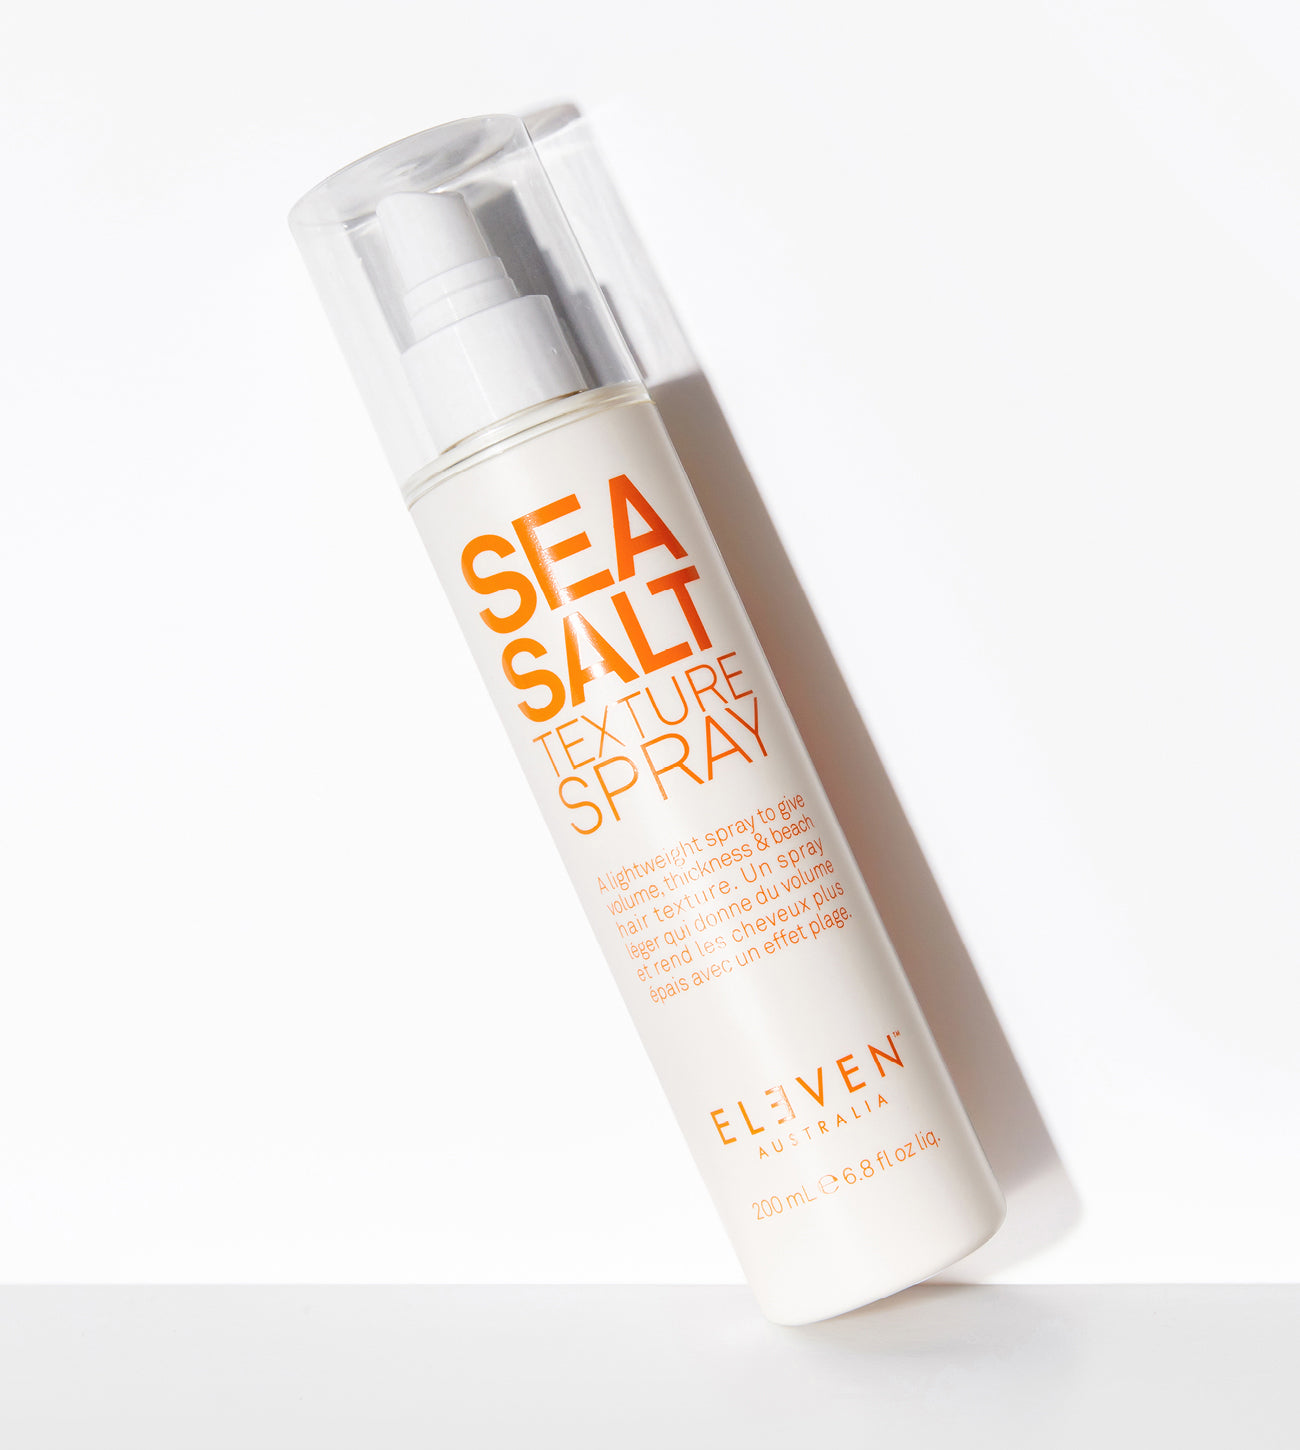 ELEVEN Hair Sea Salt Texture Spray lightweight texture thickens fine hair easy to use